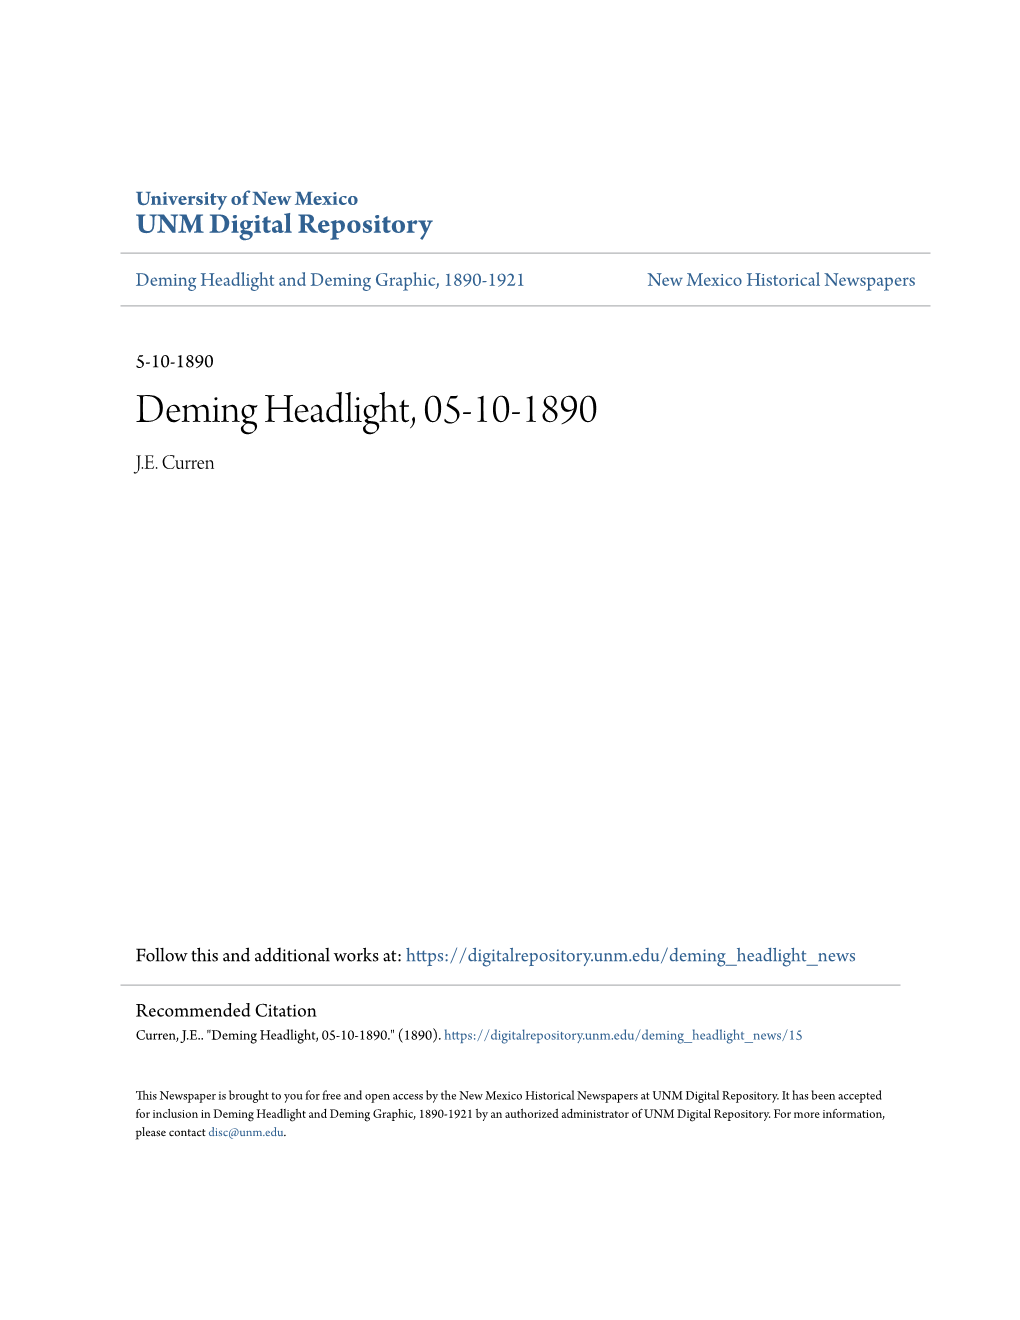 Deming Headlight, 05-10-1890 J.E